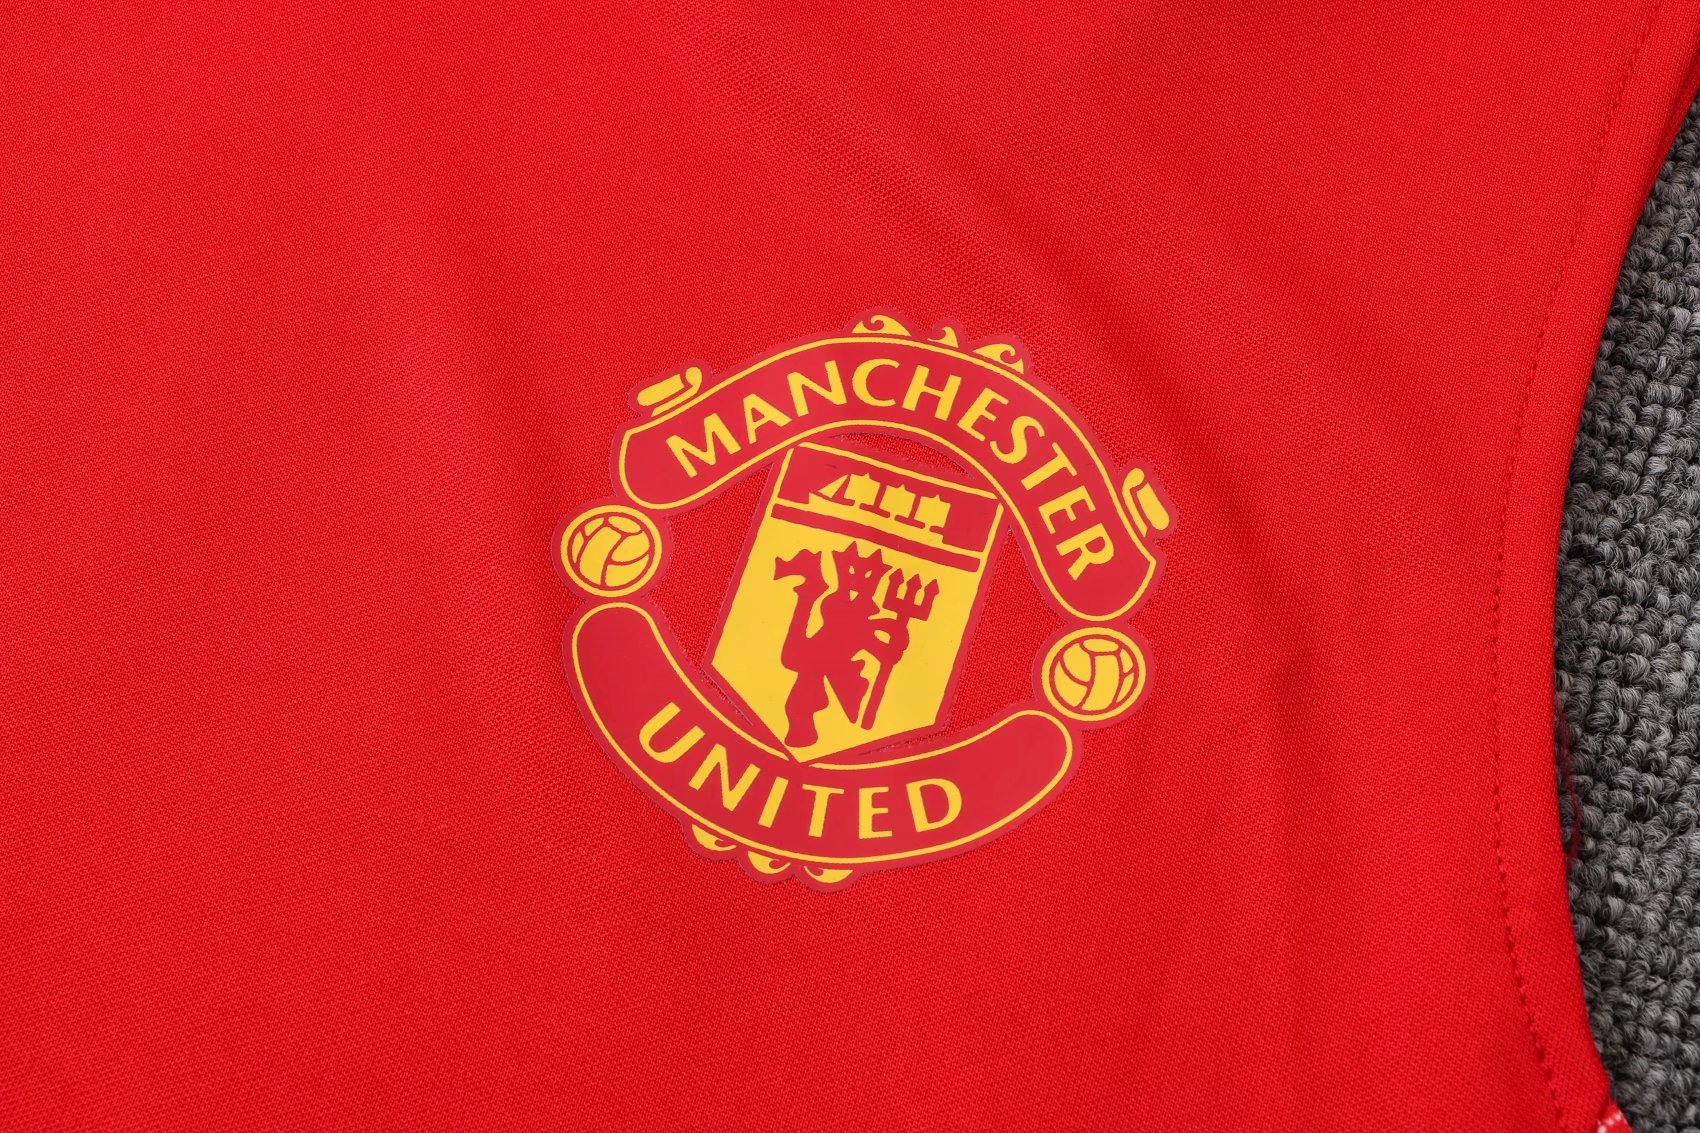 Manchester United Soccer Singlet Jersey Red Mens 2021/22